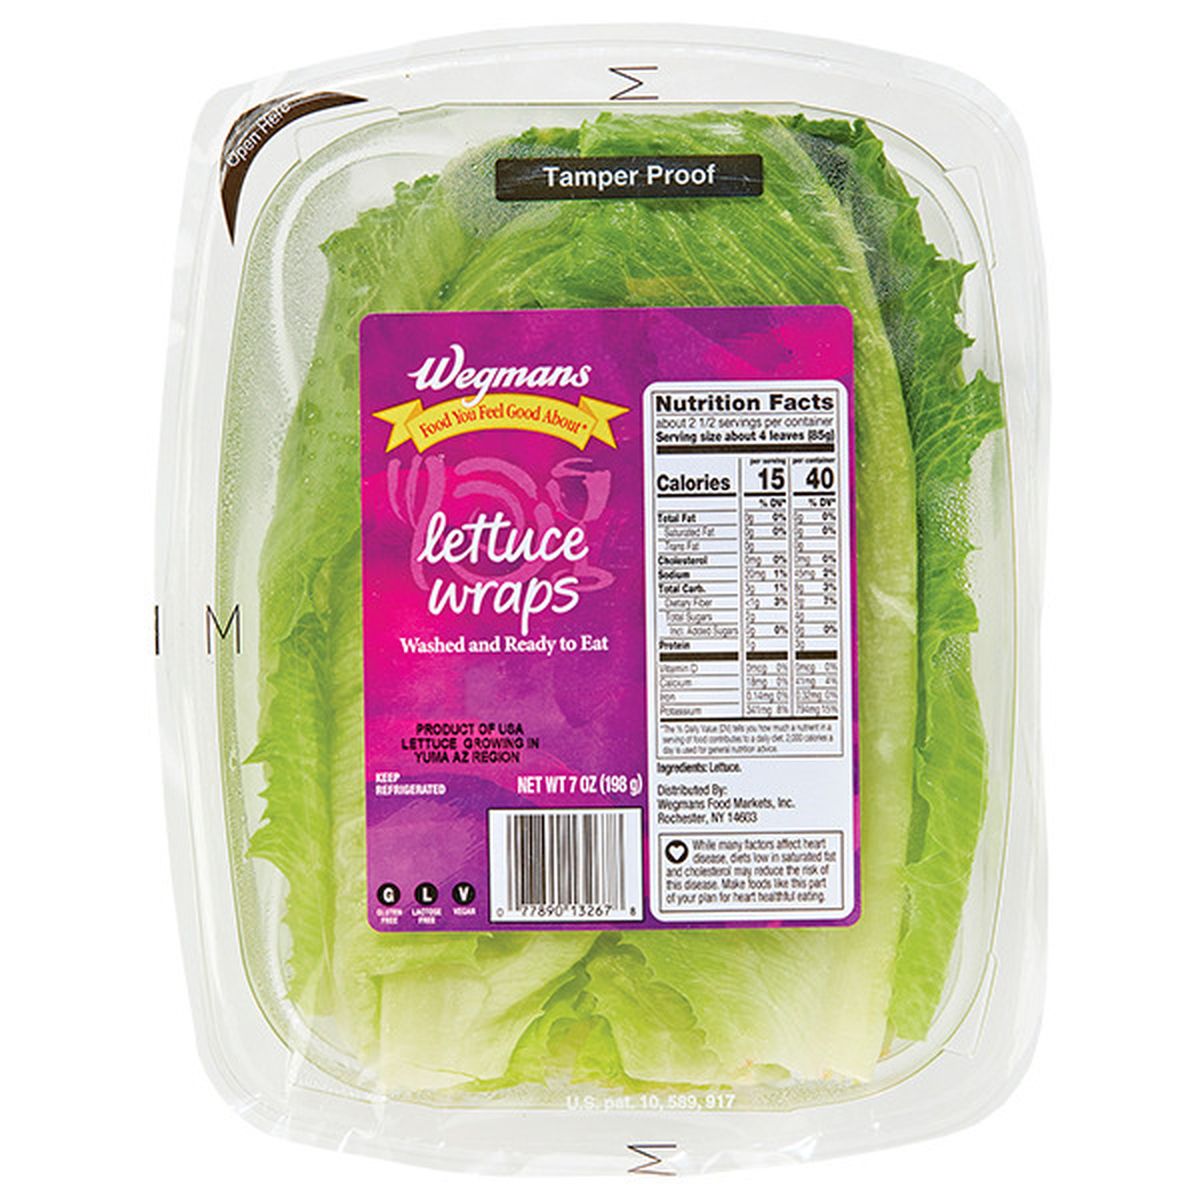 Calories in Wegmans Lettuce Wraps